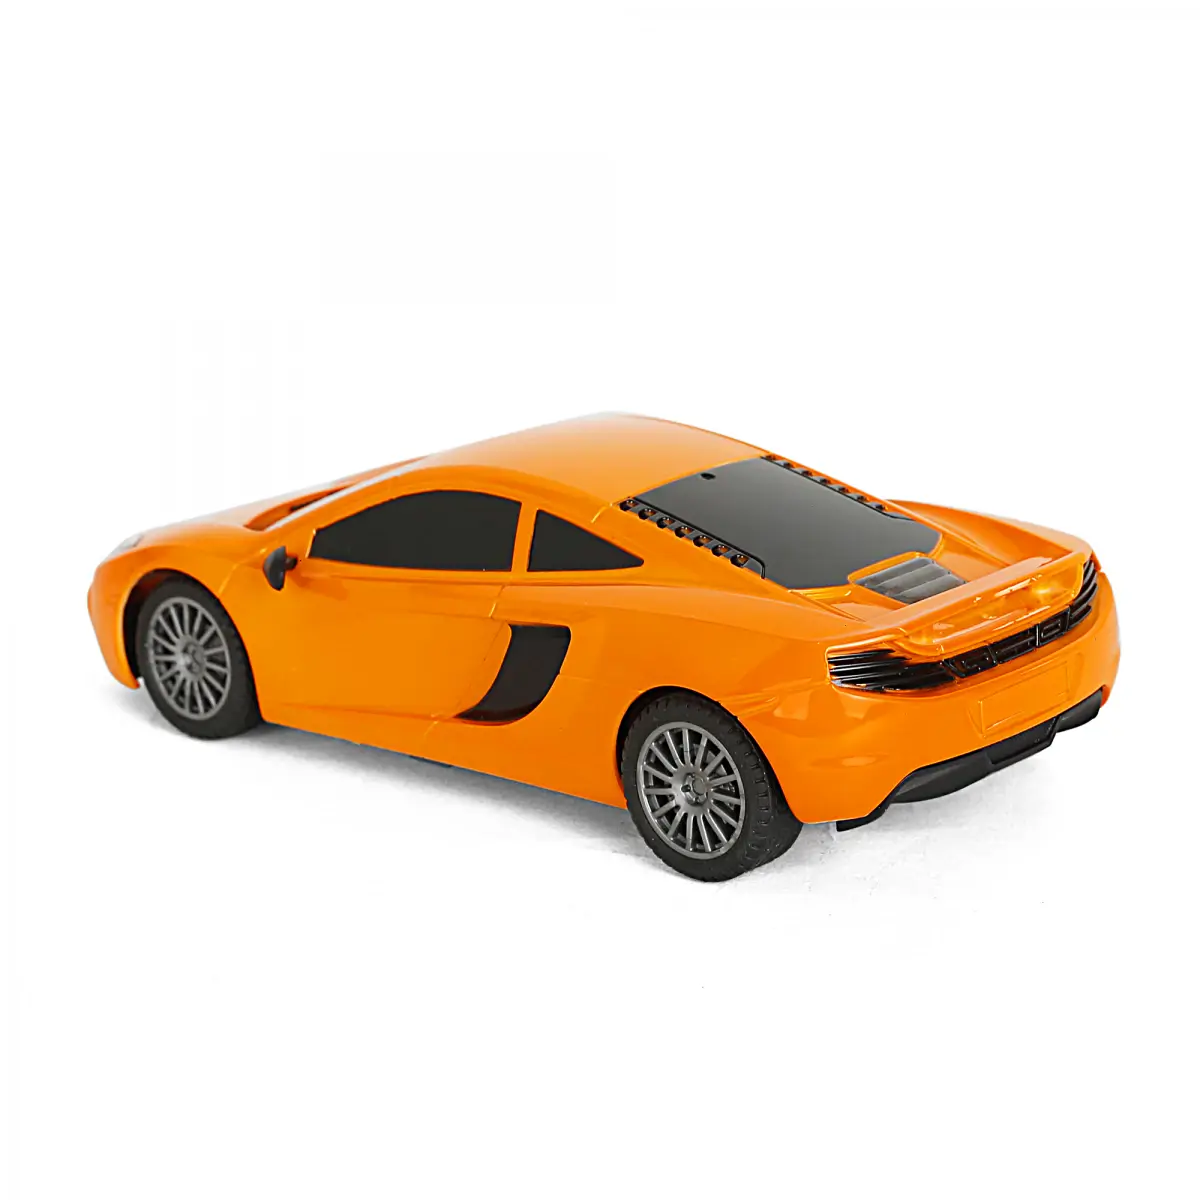 Sirius Toys Remote Control Super Car, 4Y+, Orange